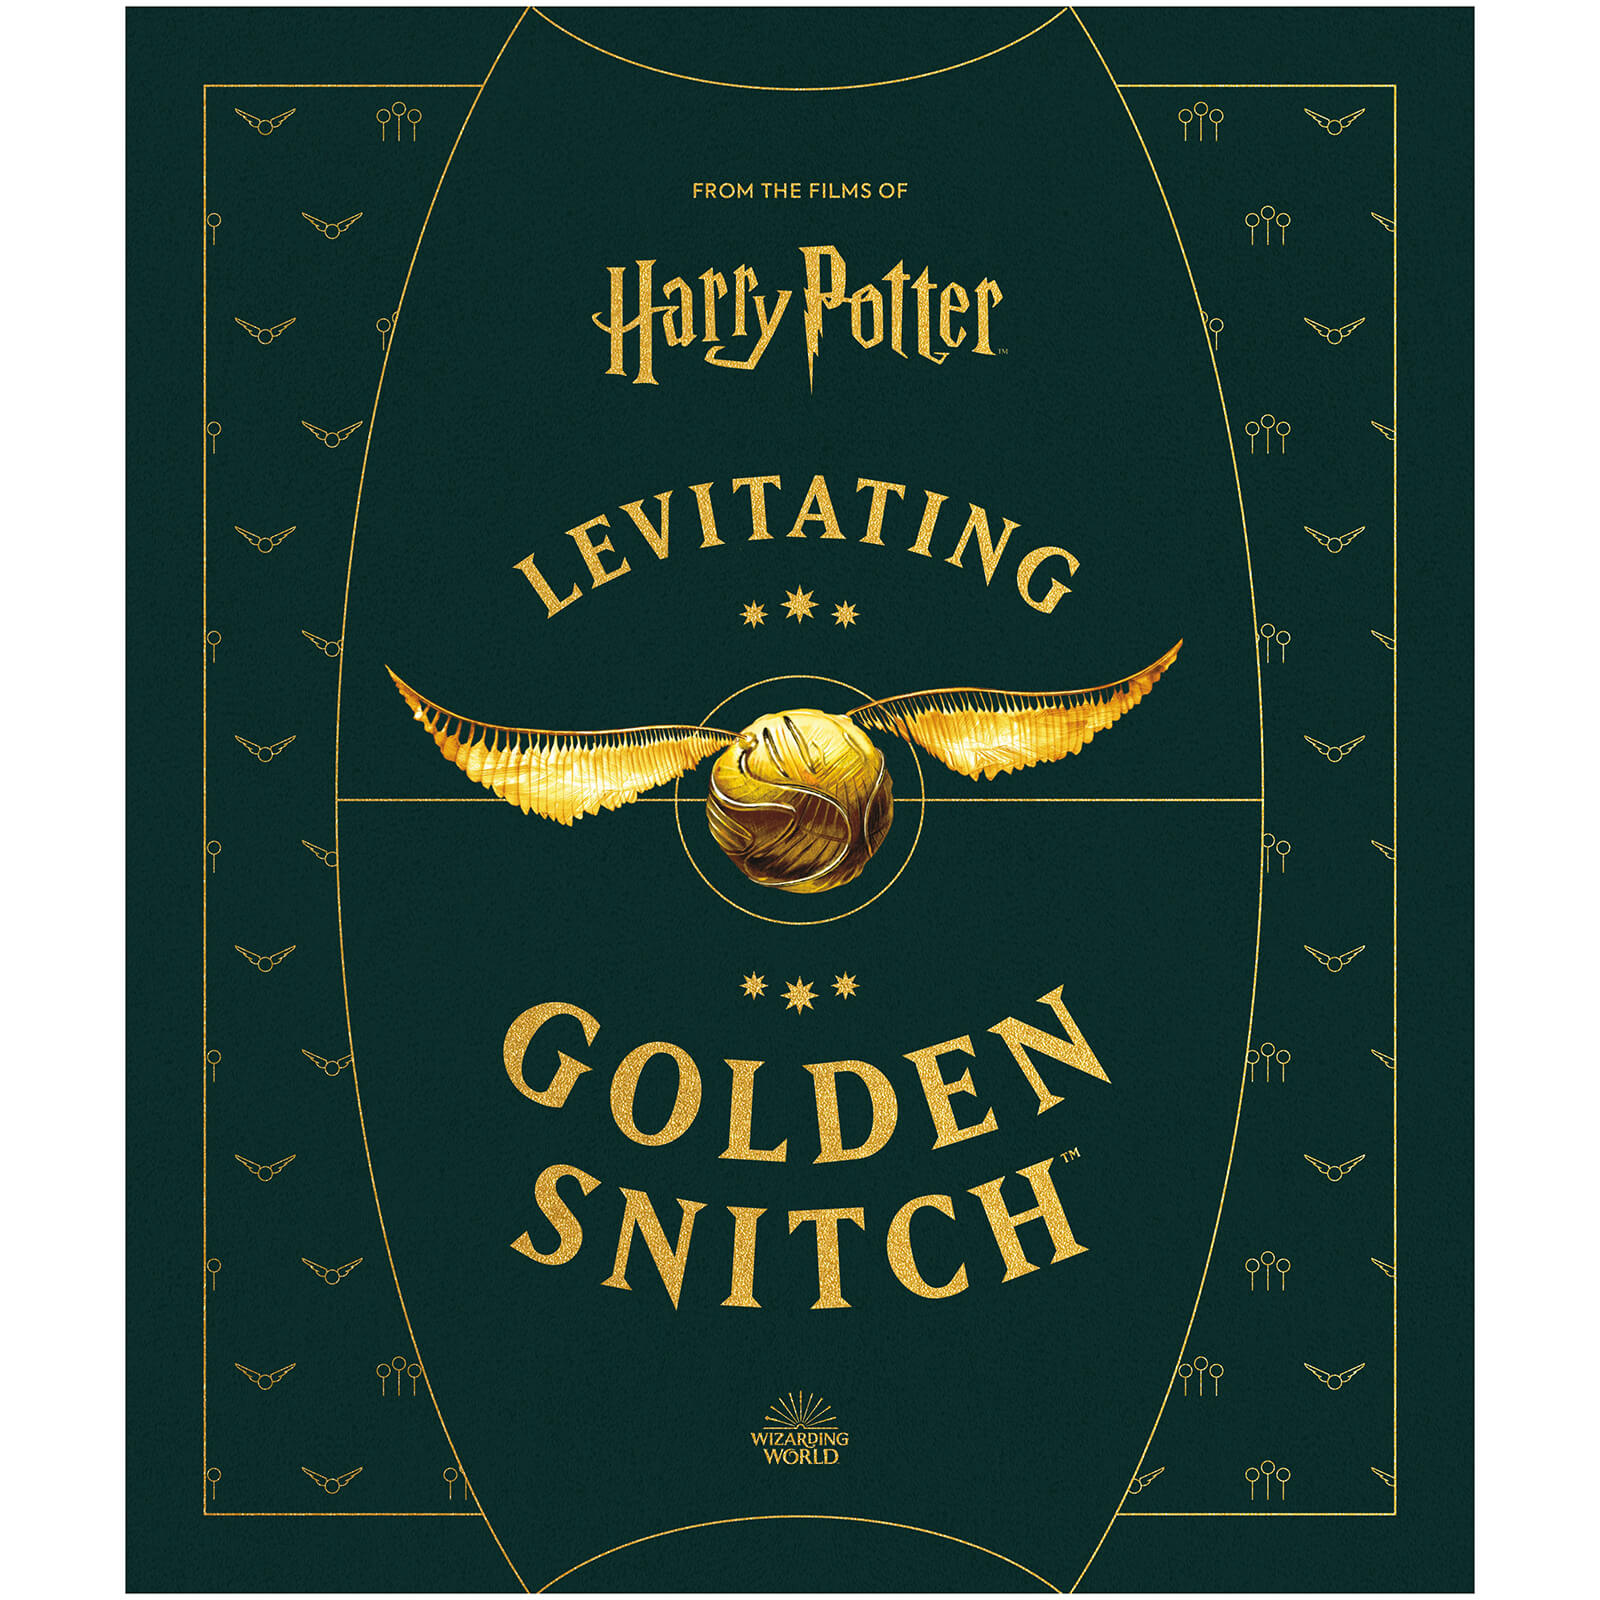 Image of Harry Potter Levitating Golden Snitch